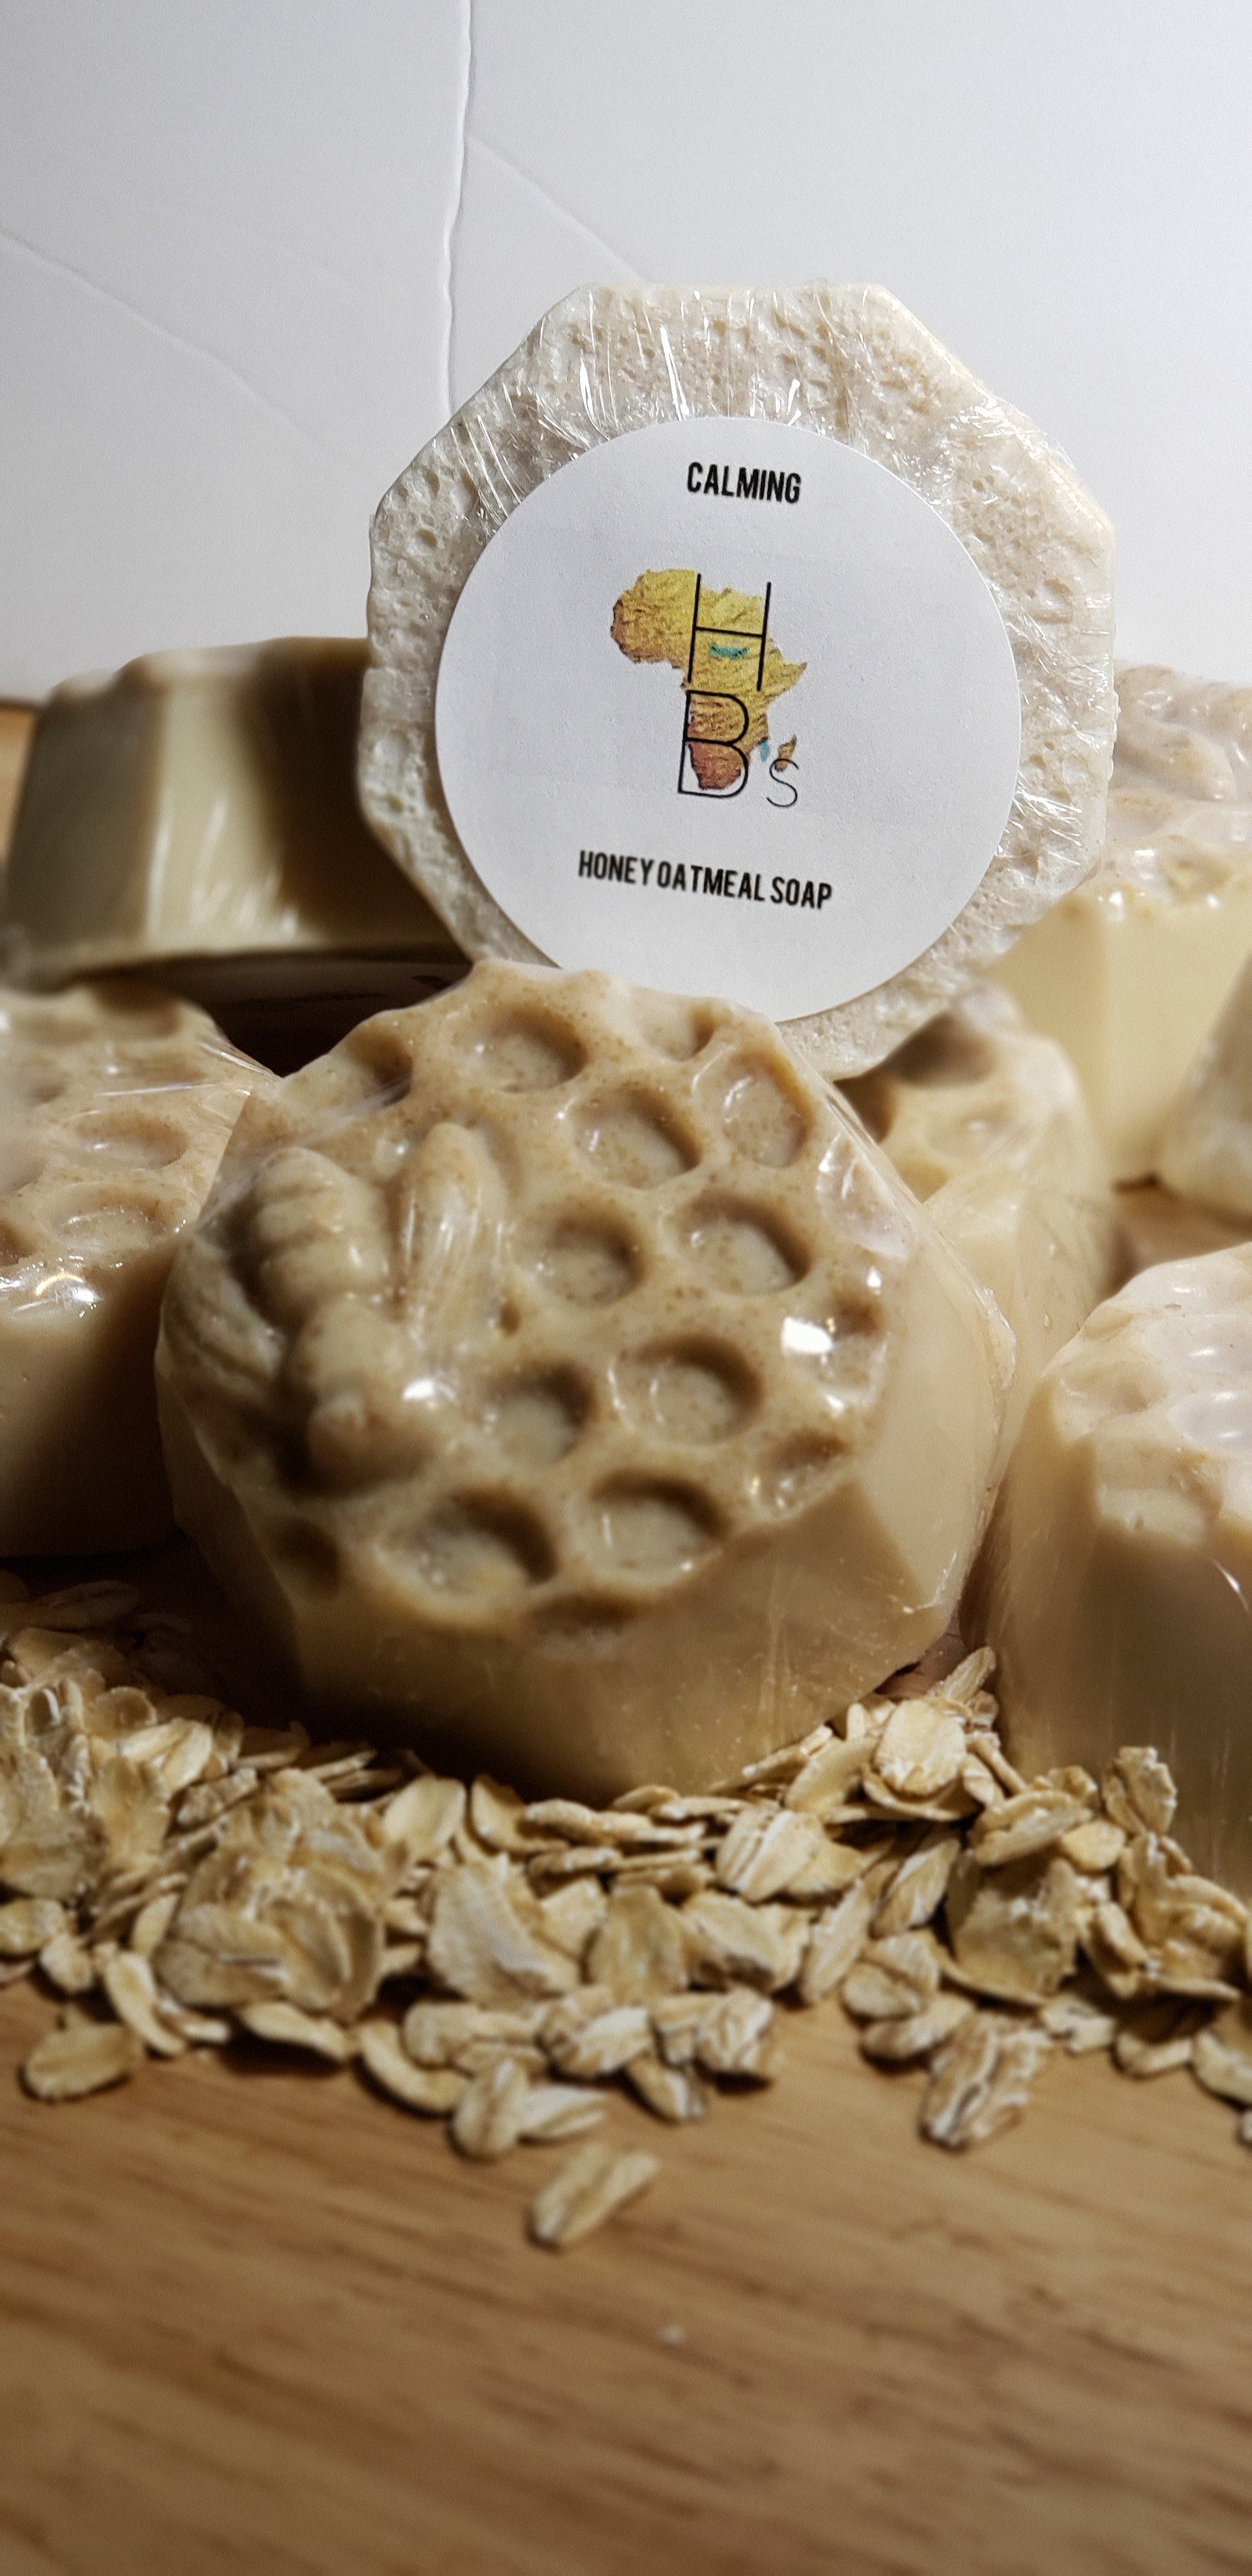 Honey B's Calming Honey Oatmeal Soap